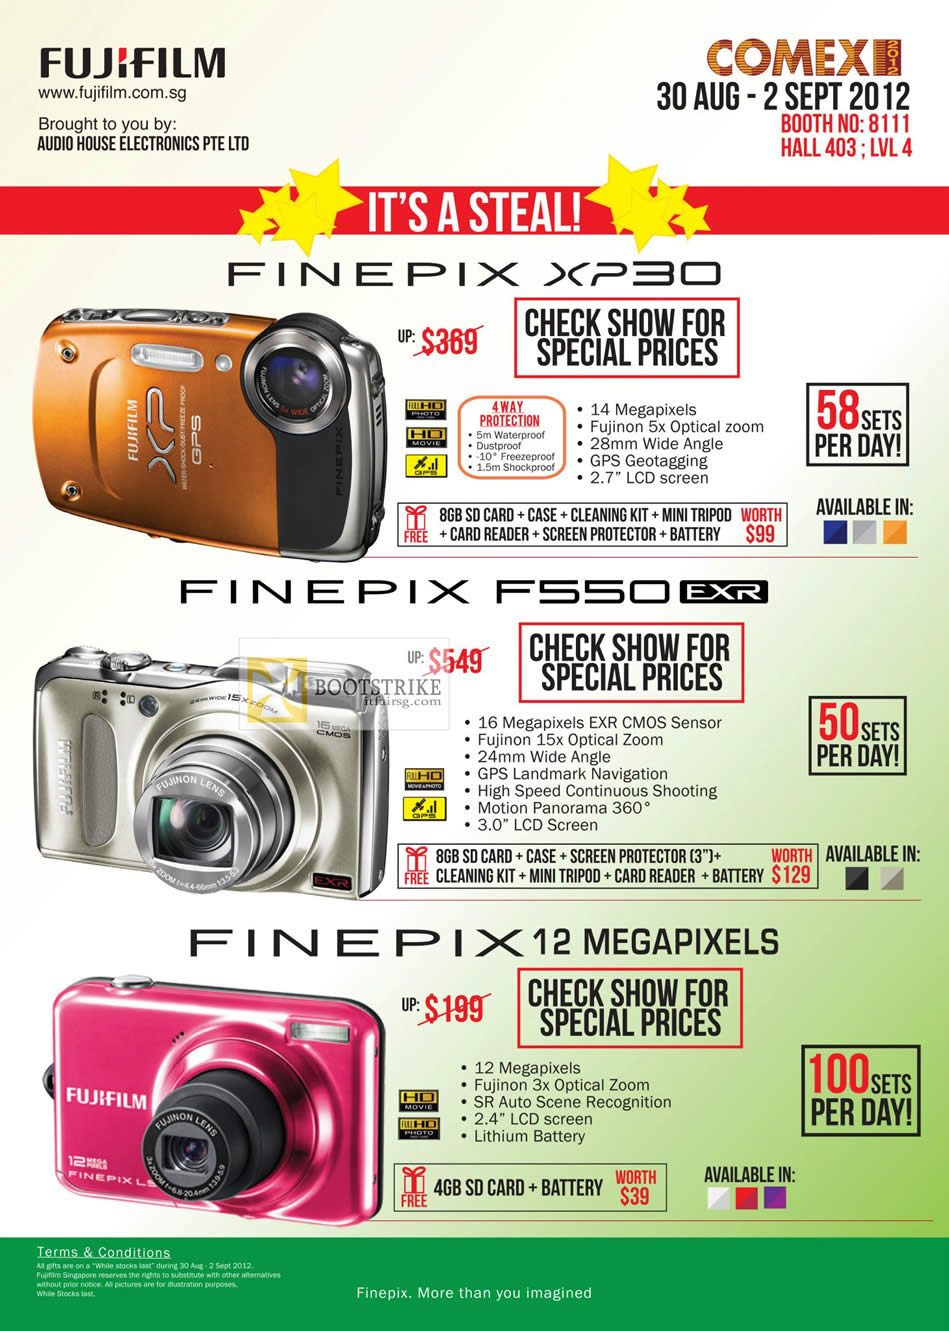 COMEX 2012 price list image brochure of Fujifilm Digital Cameras Finepix XP30, F550, 12 Megapixels